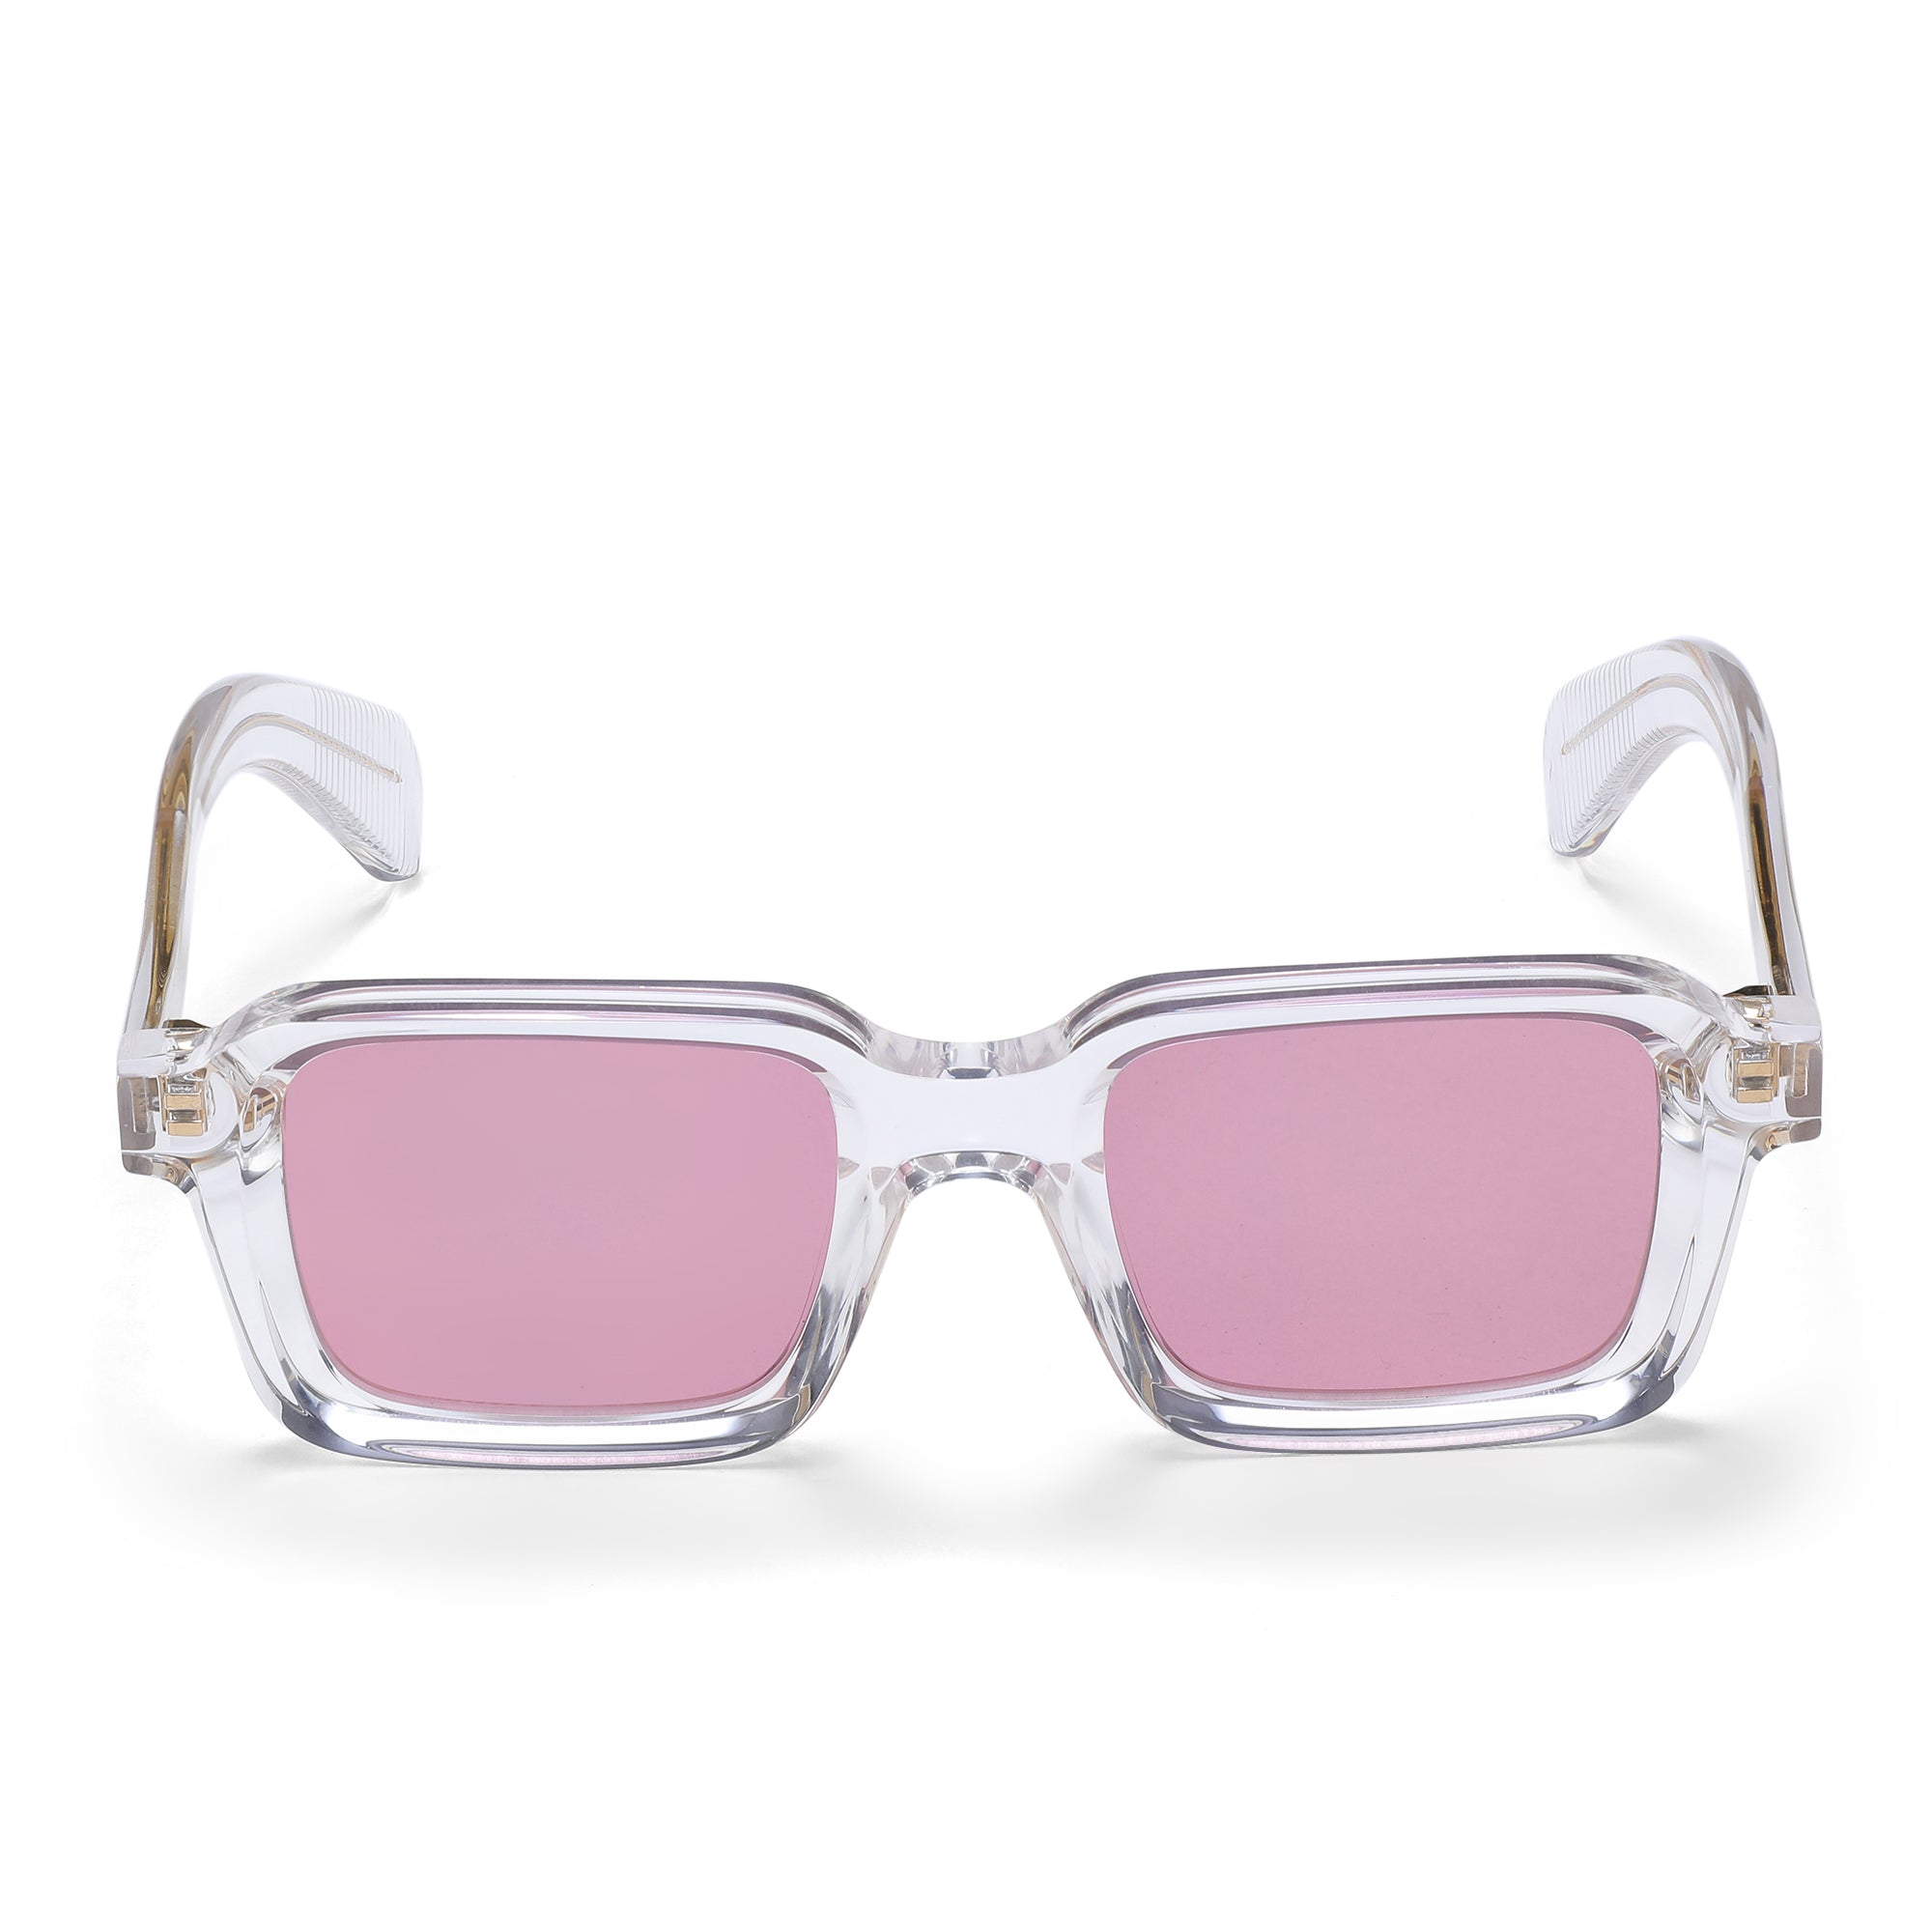 Clear Glasses Frames - Ace Eyewear